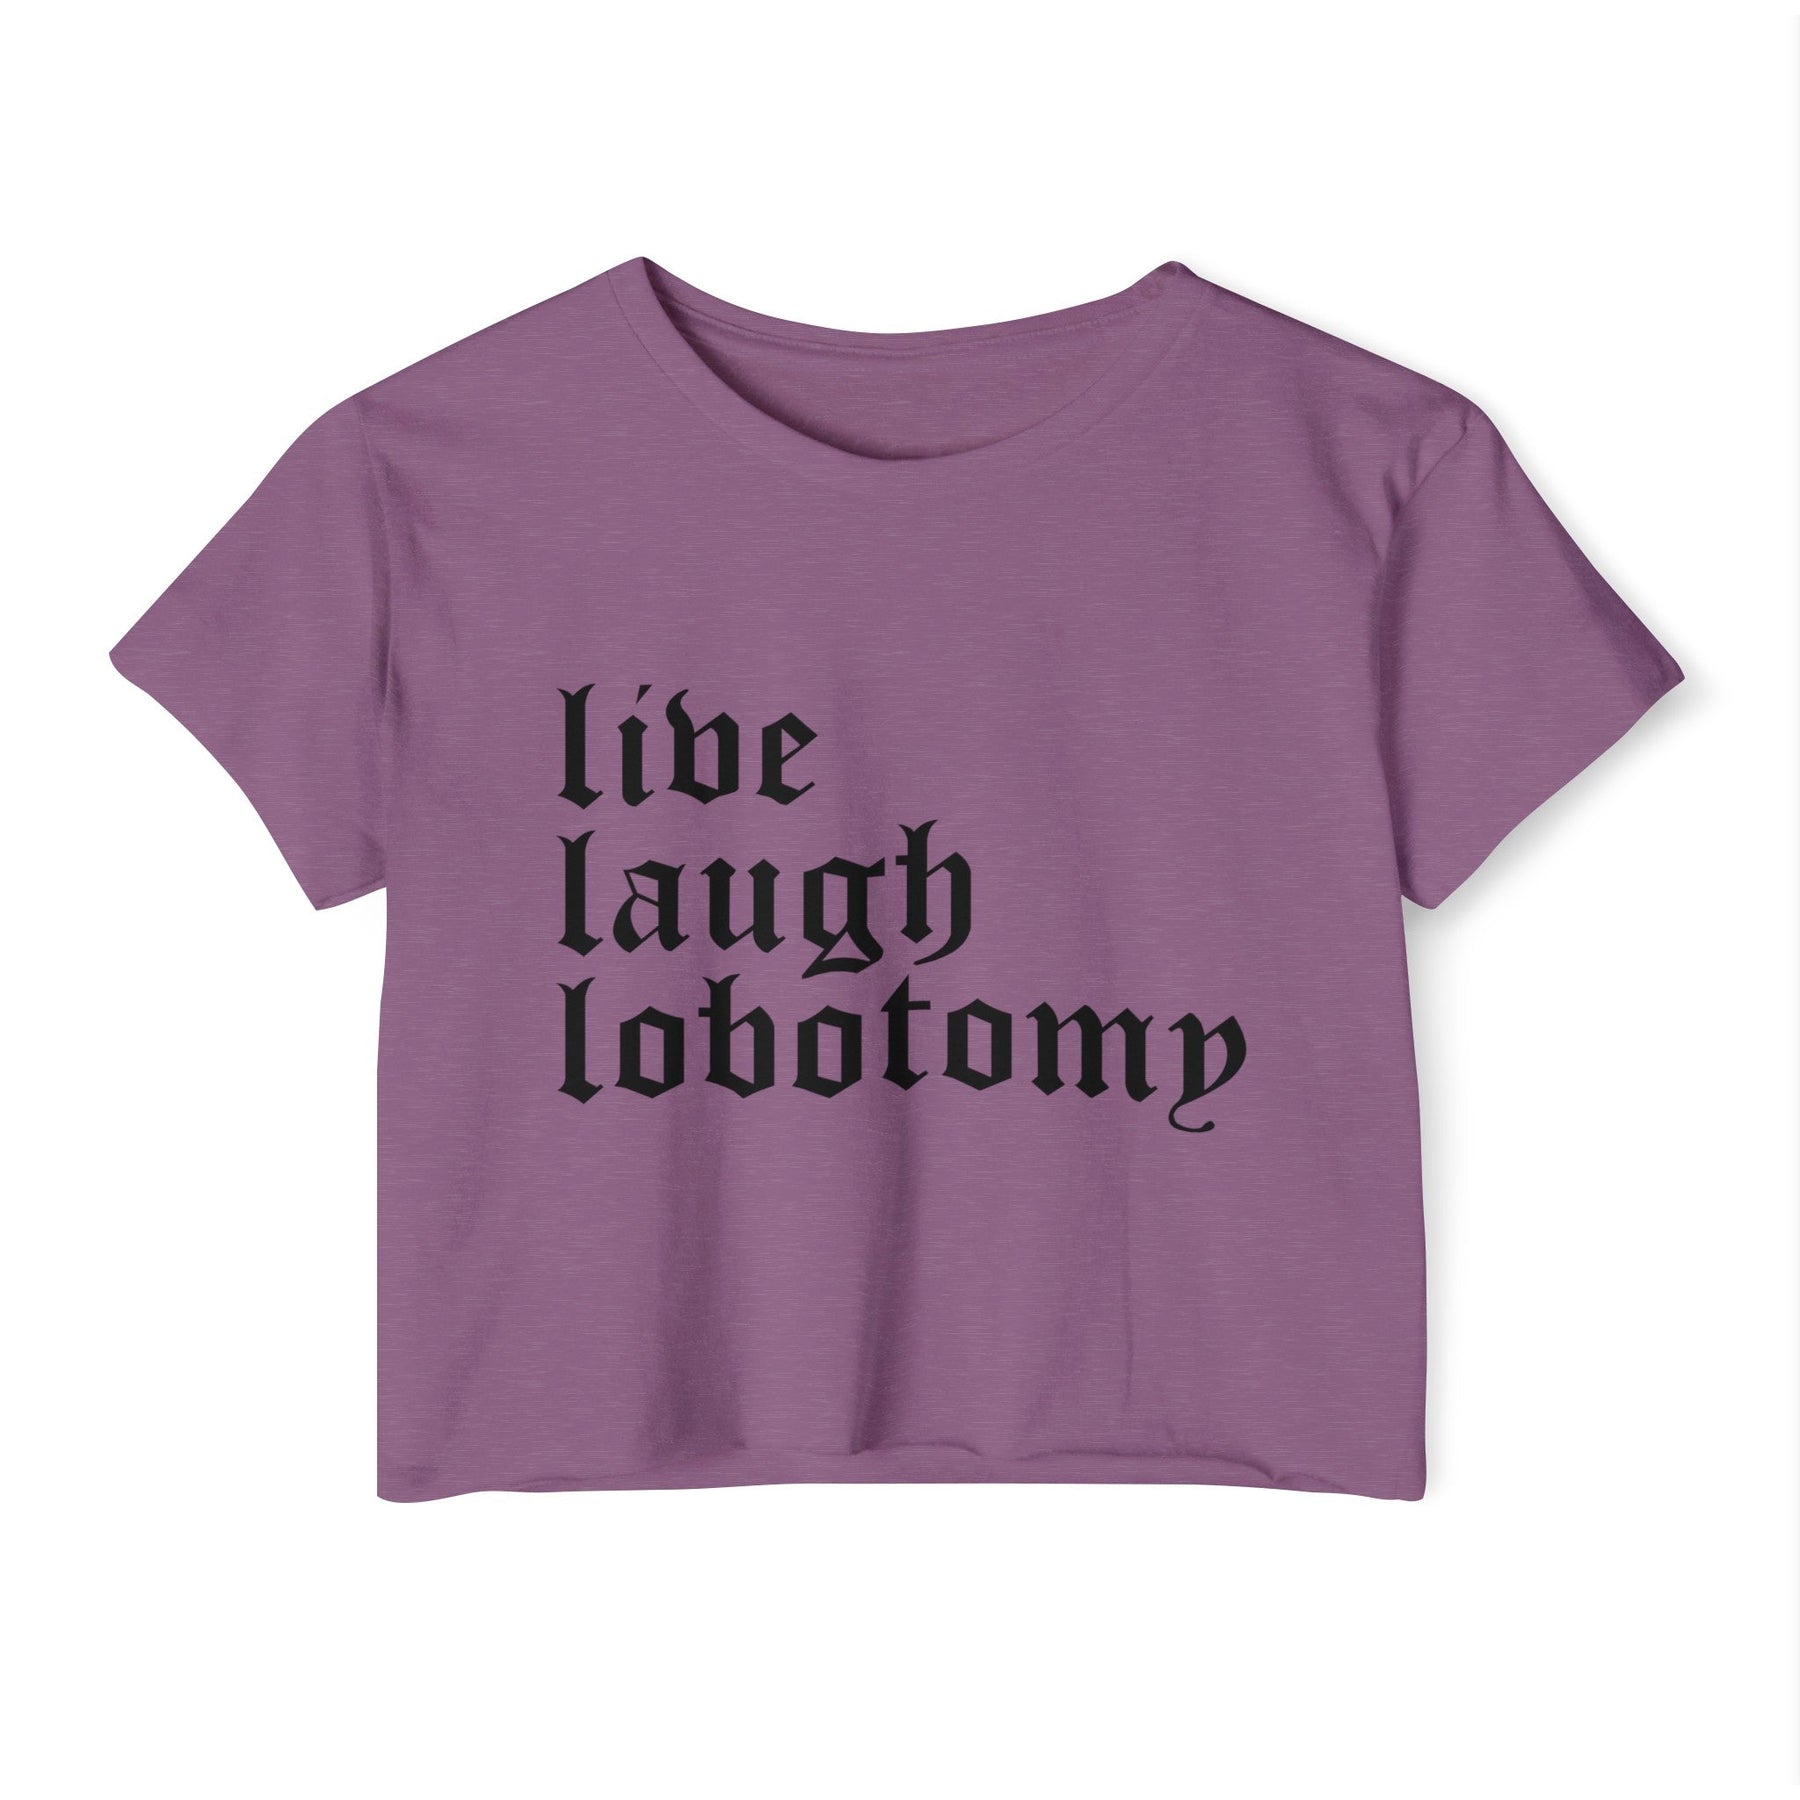 Live Laugh Lobotomy Women's Lightweight Crop Top - Goth Cloth Co.T - Shirt69404385706405699684